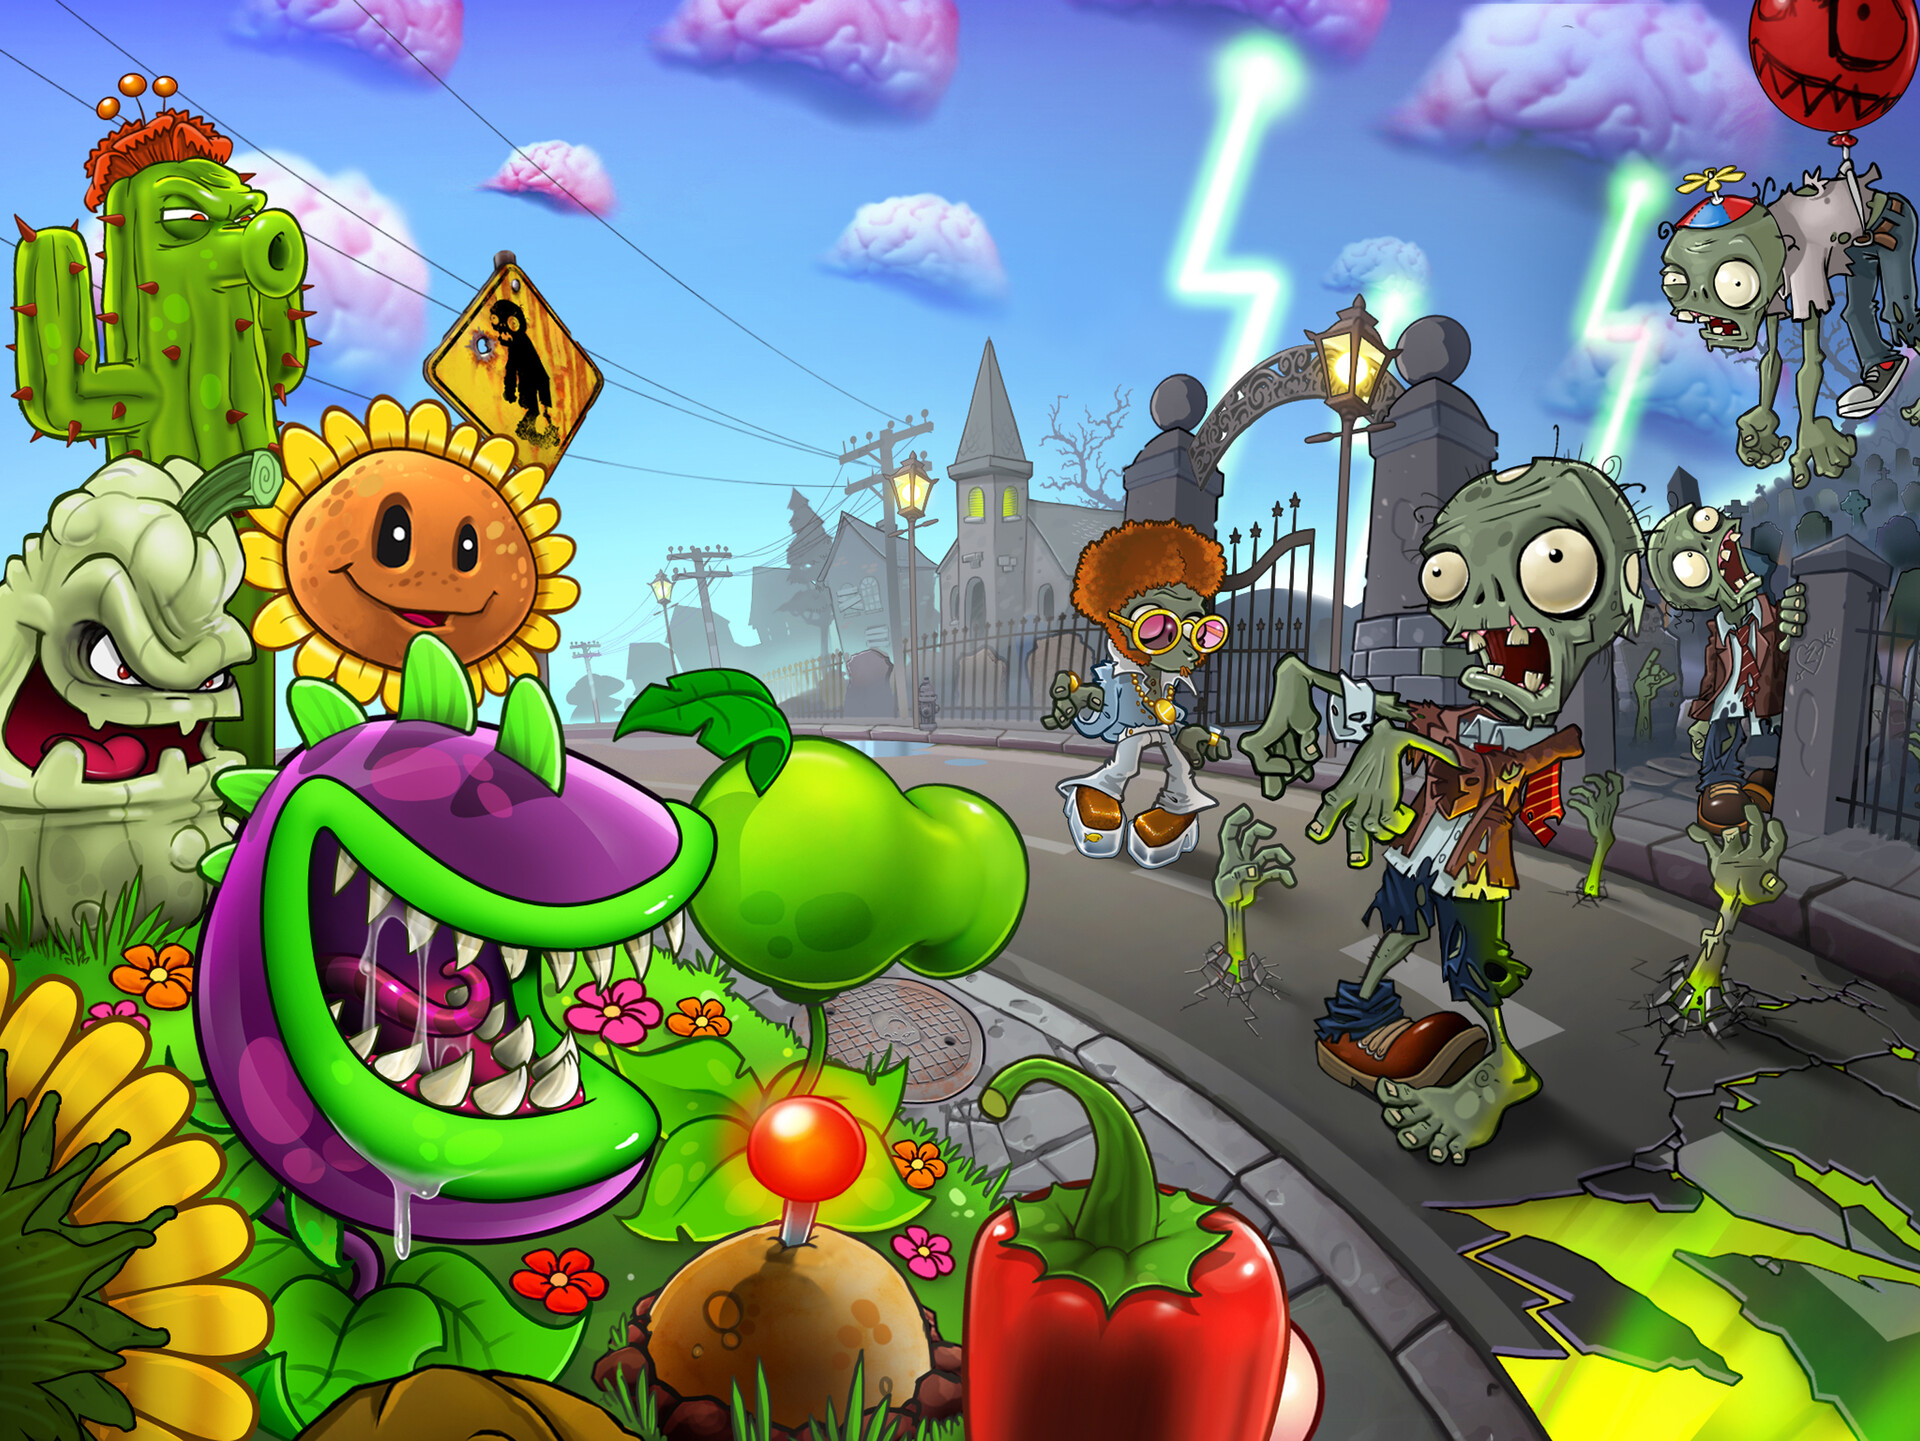 Popcap's Latest Game Is Plants Vs. Zombies Vs. Hearthstone